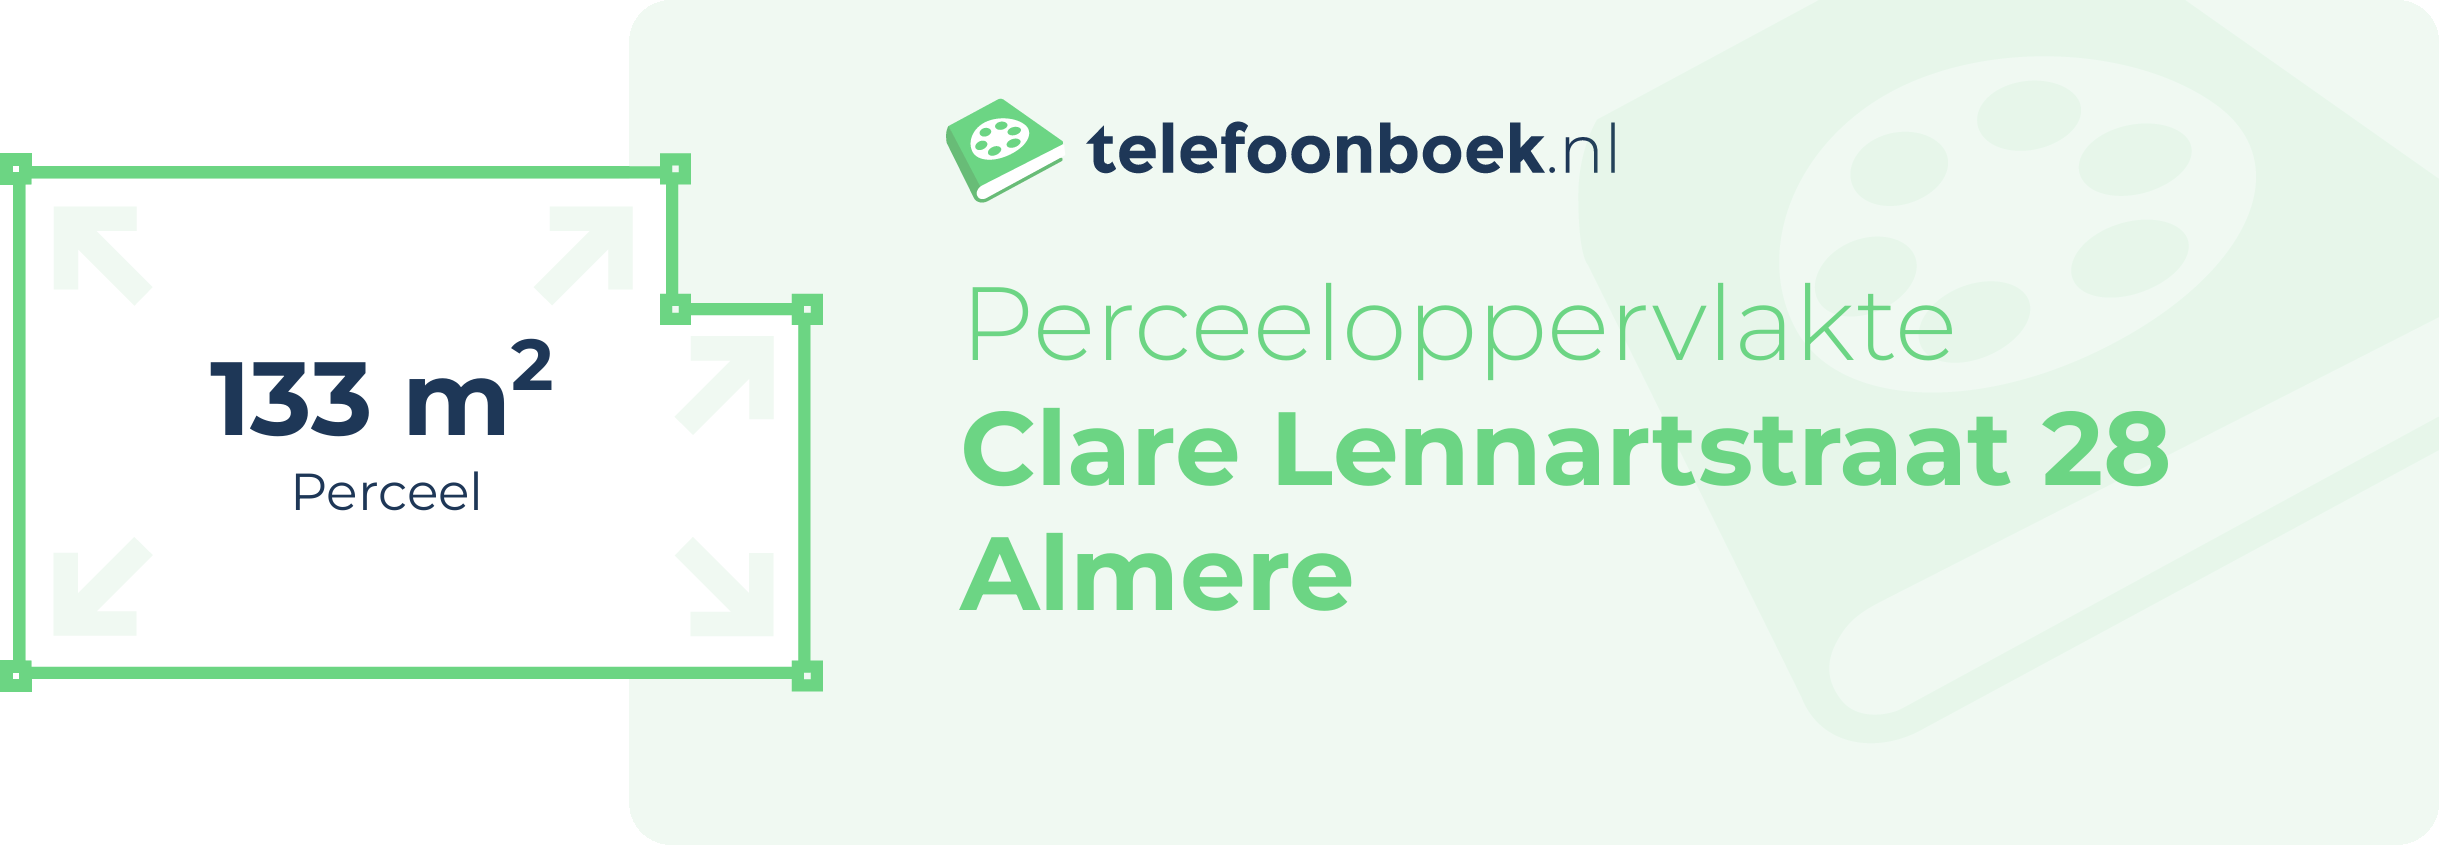 Perceeloppervlakte Clare Lennartstraat 28 Almere